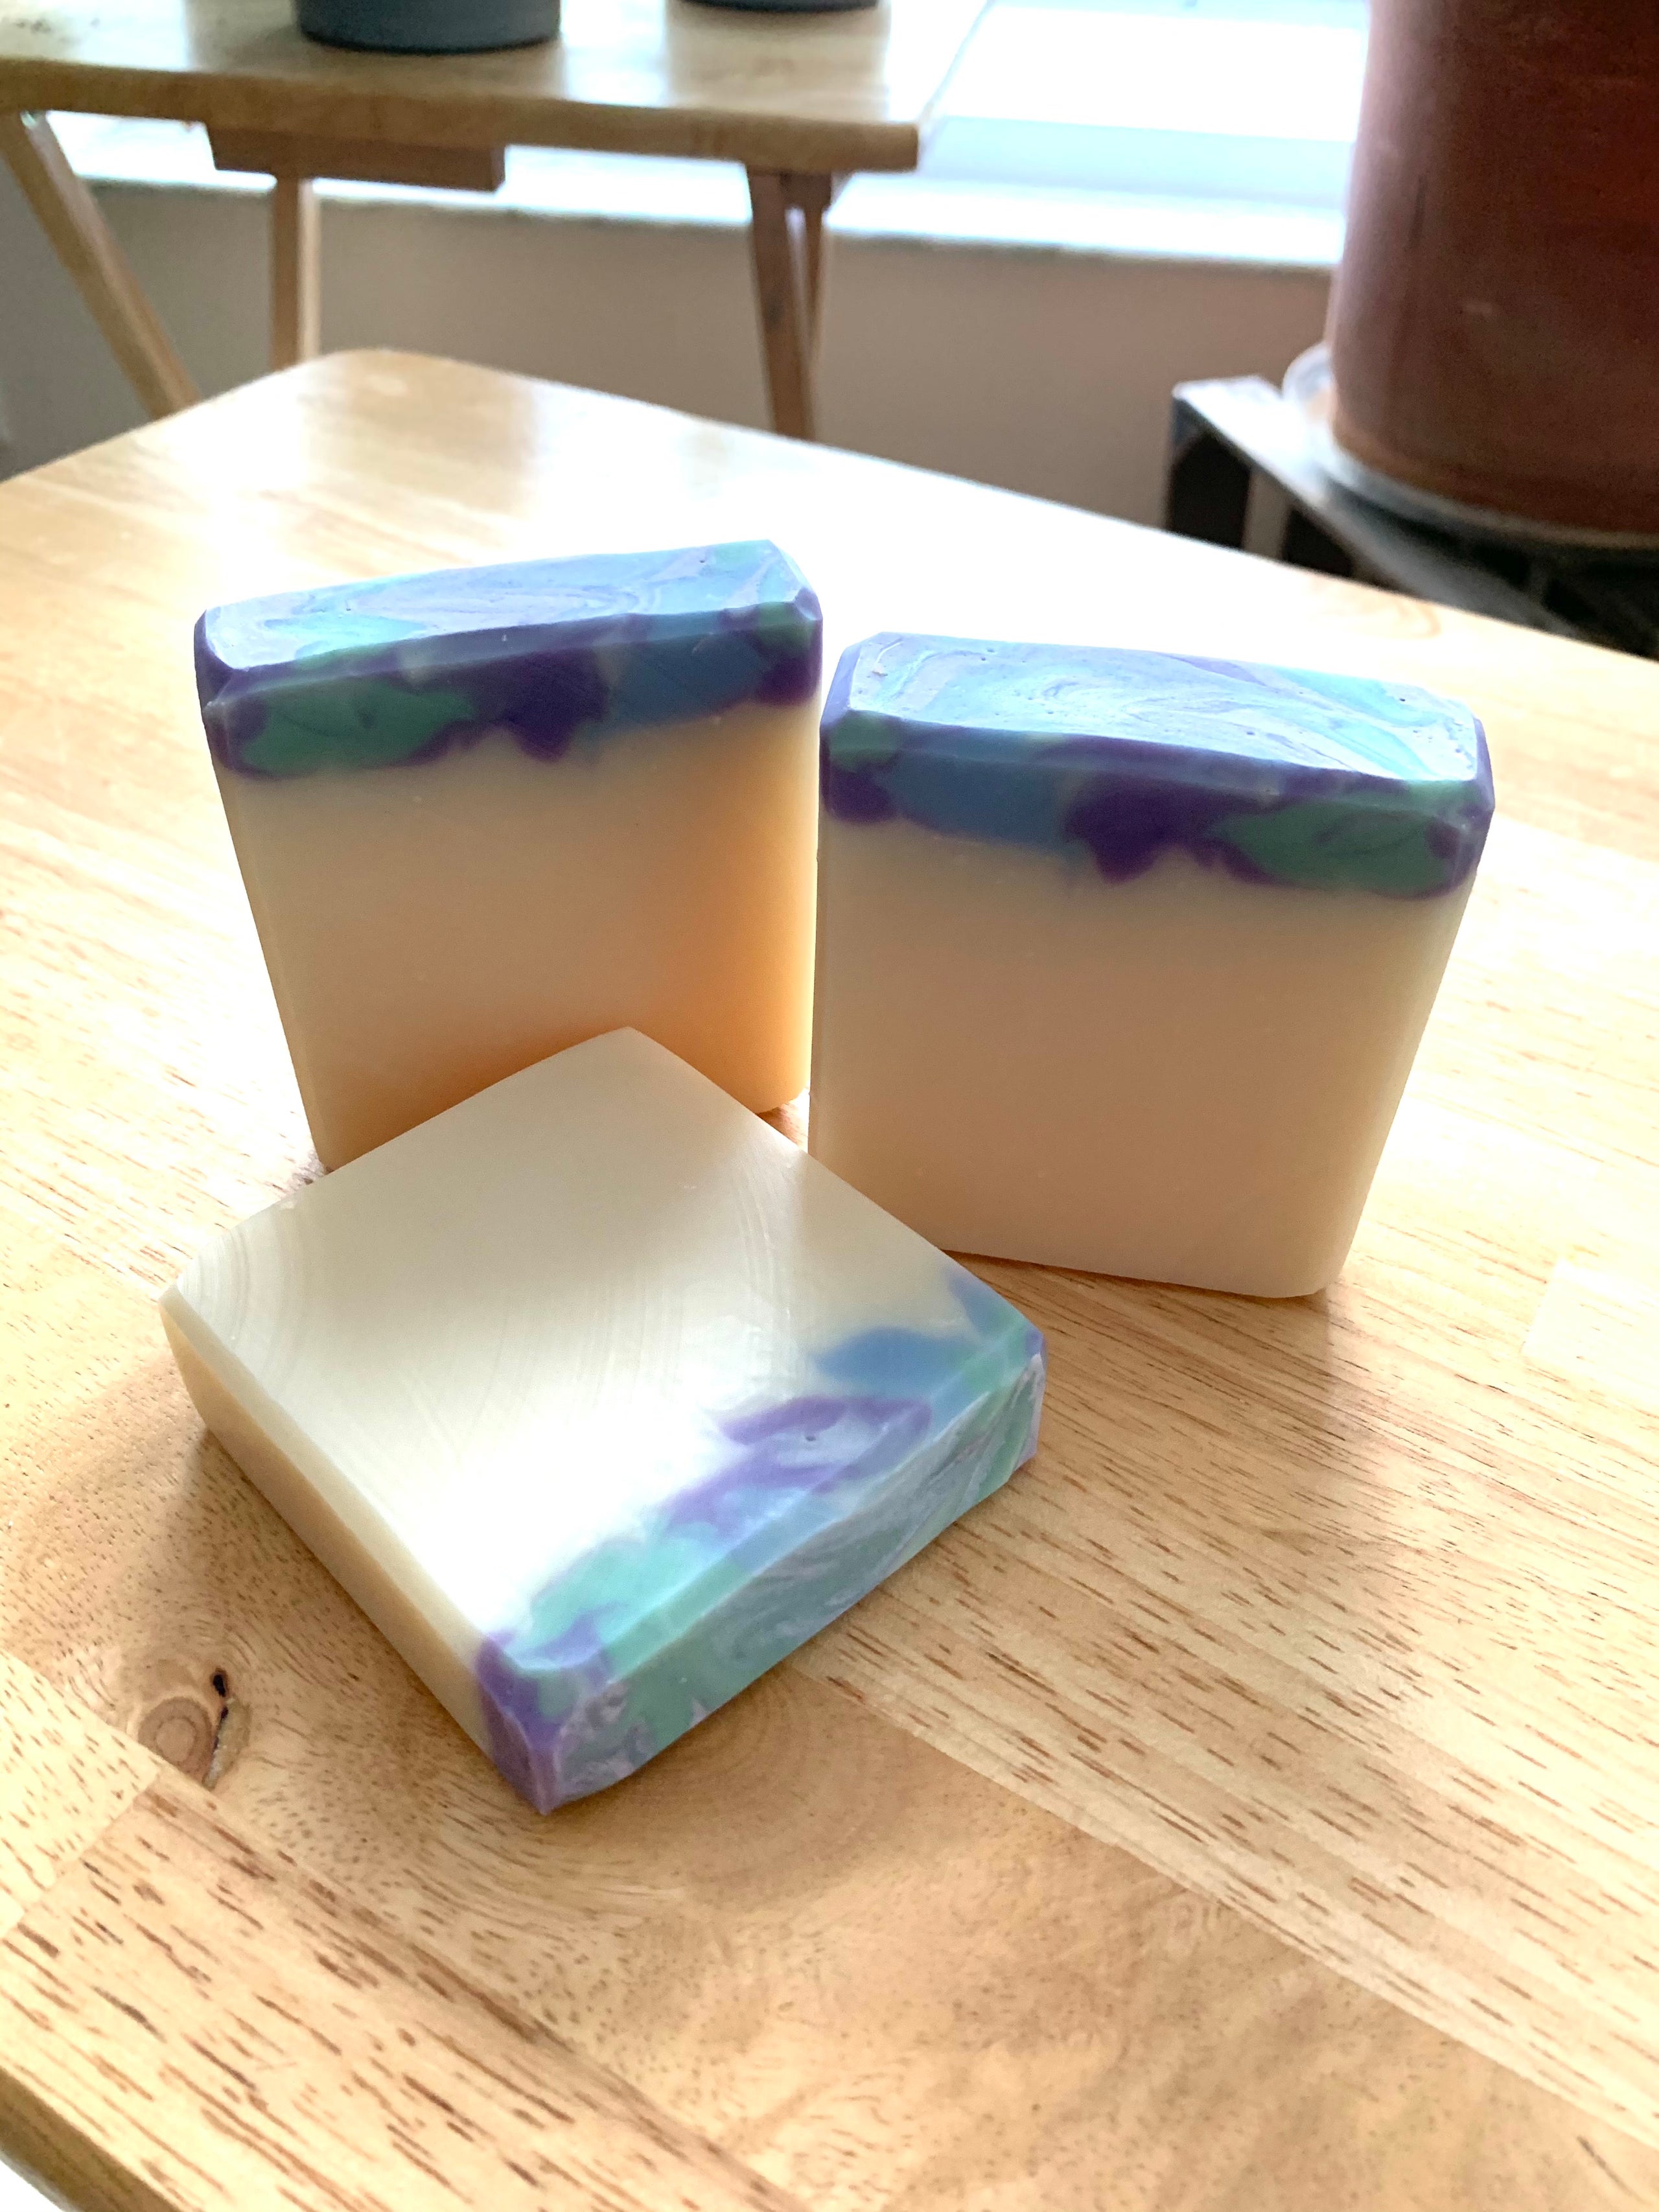 Sunny Side Handmade Glycerin Soap